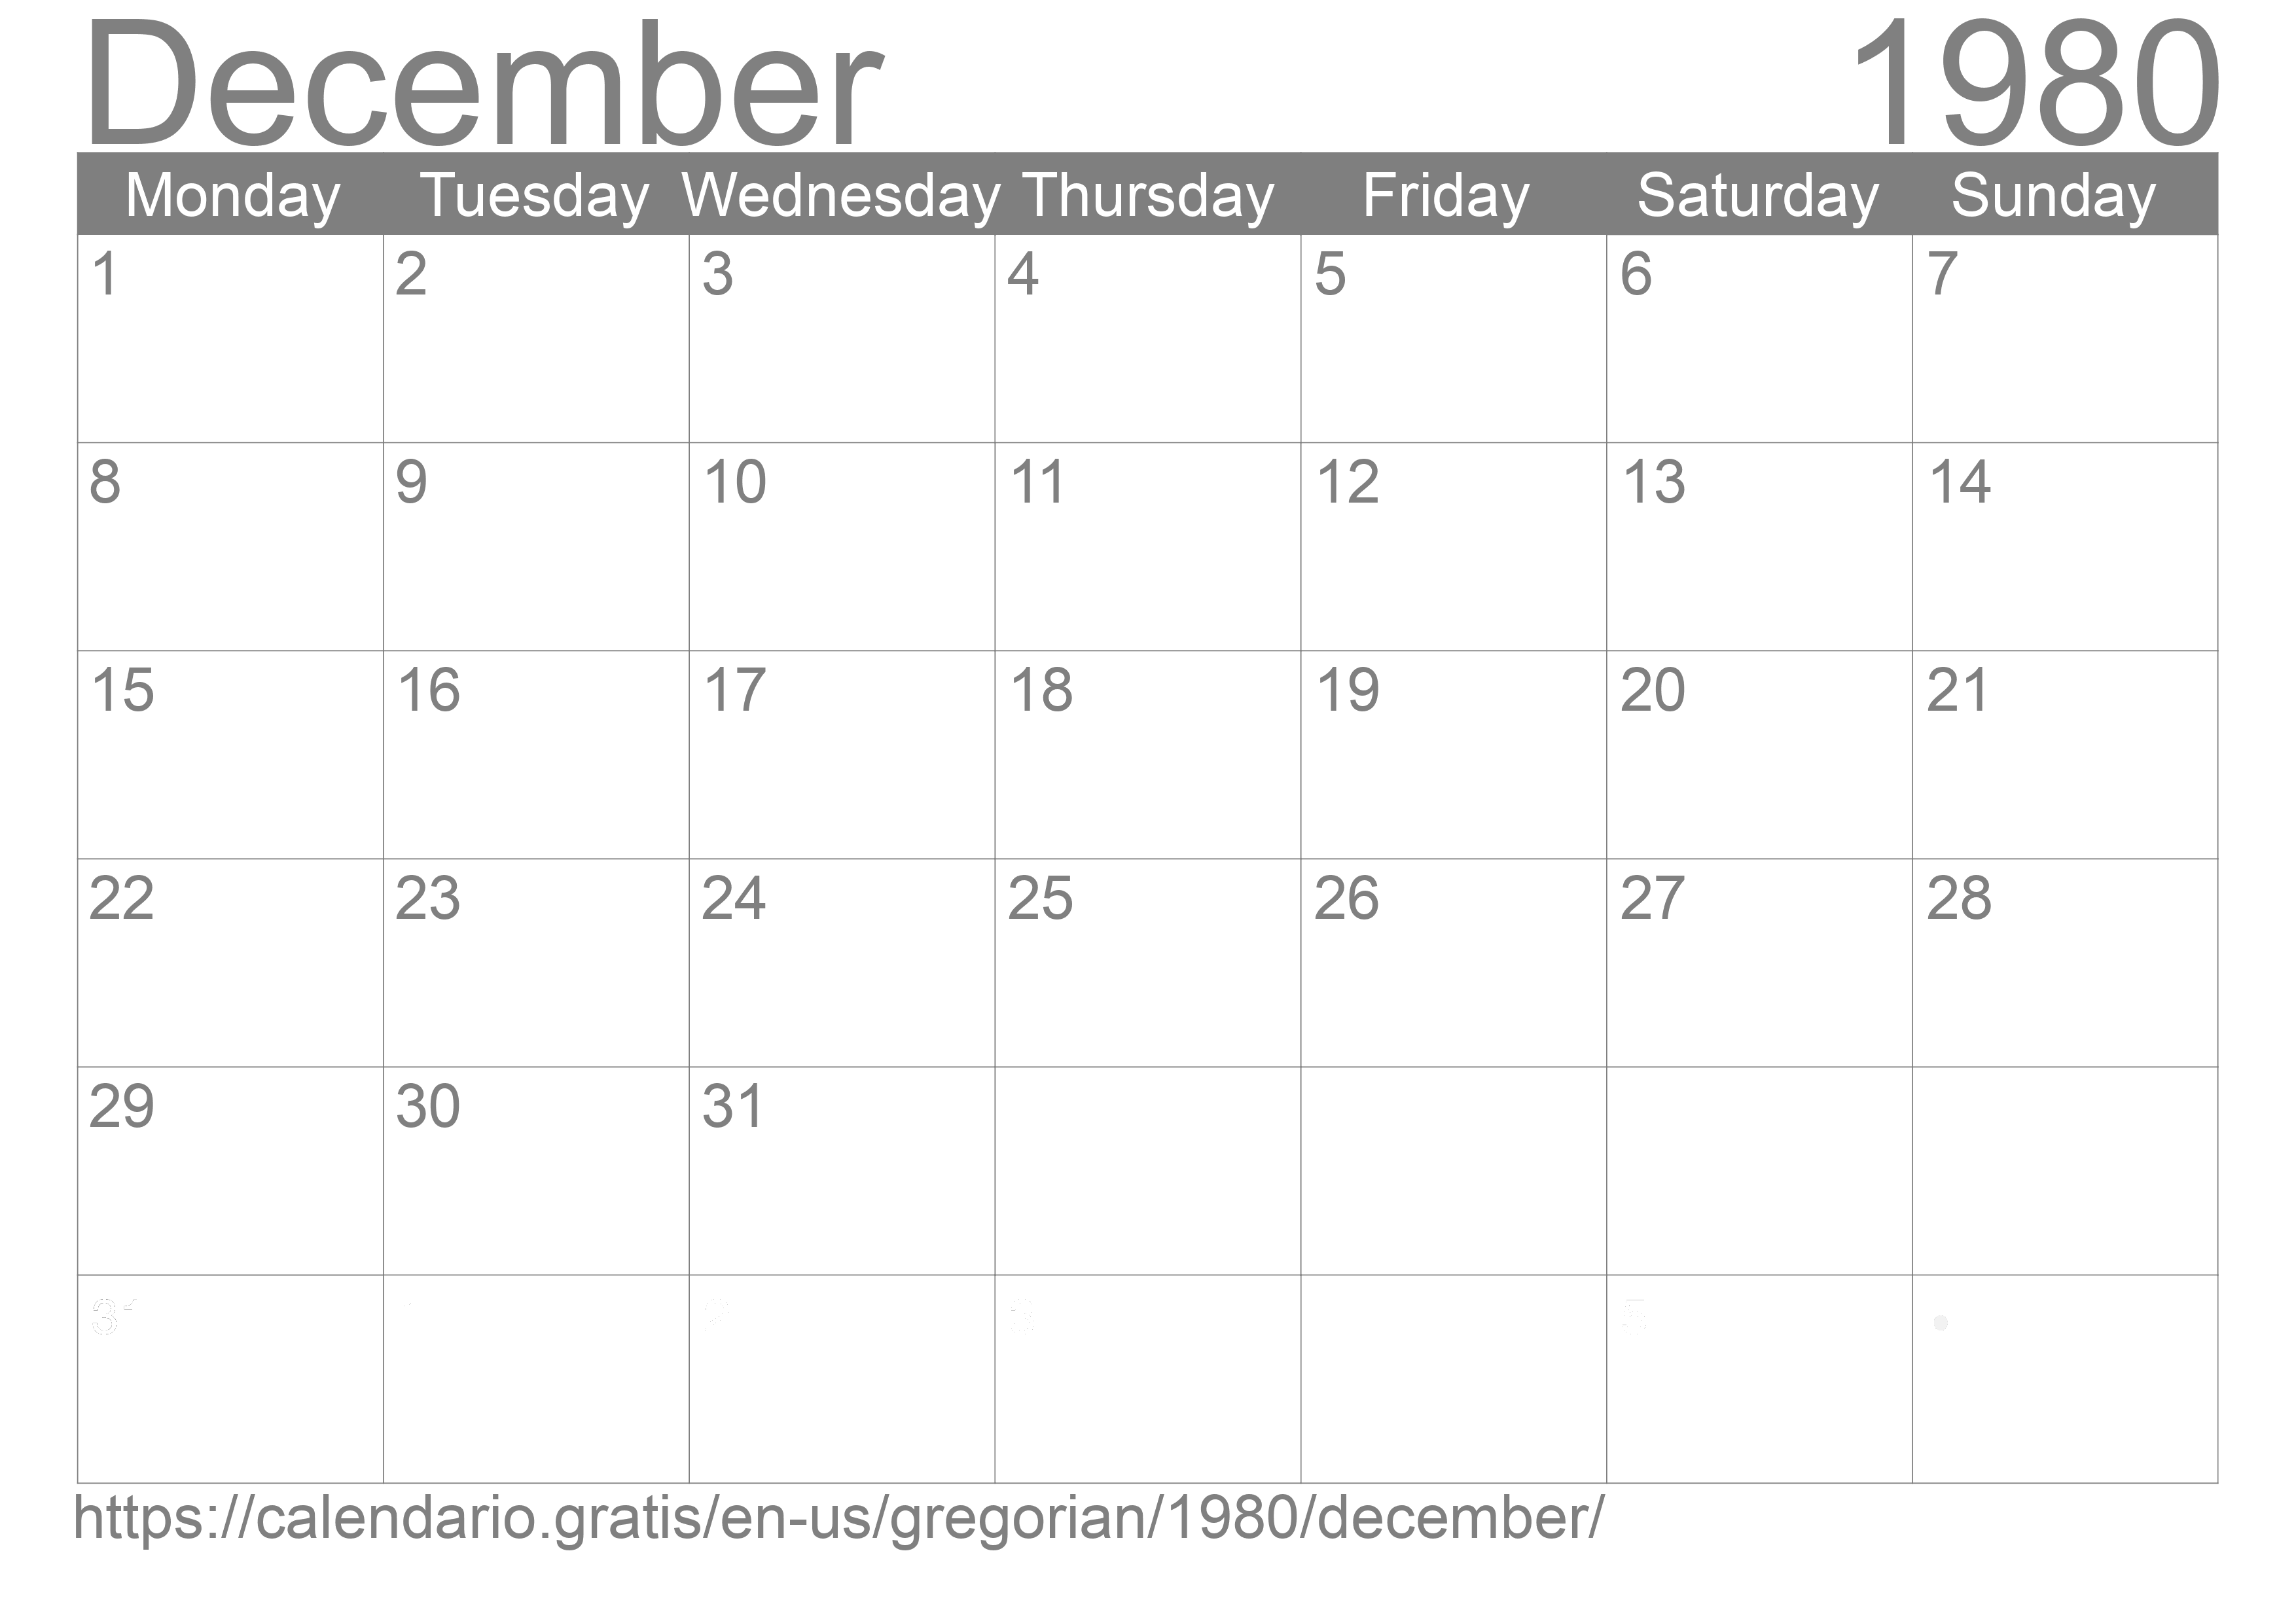 Calendar December 1980 to print